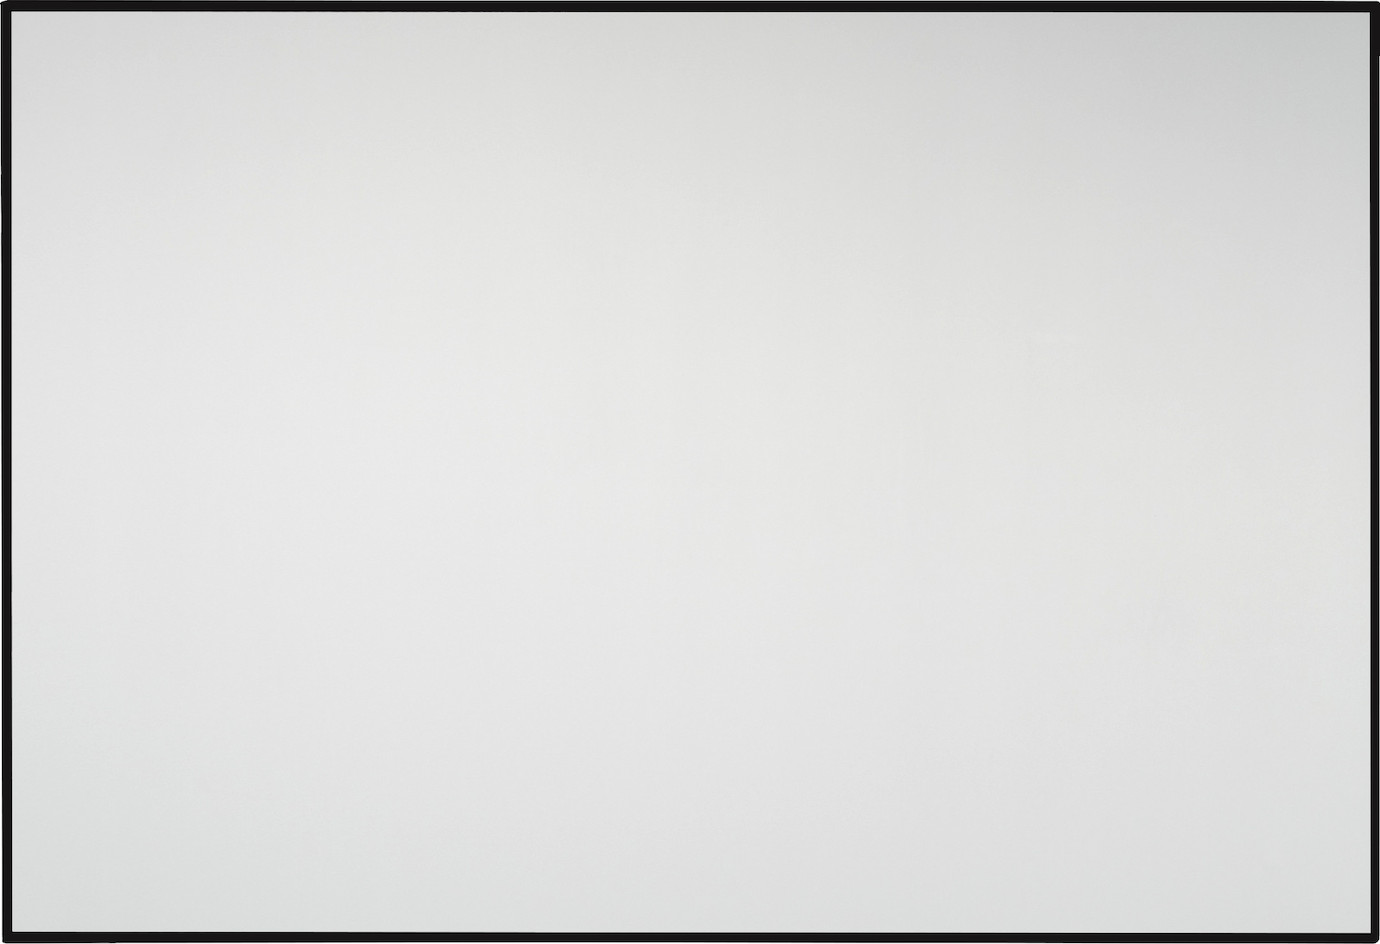 celexon HomeCinema Frame 300 x 169 cm, 135" - Dynamic Slate ALR